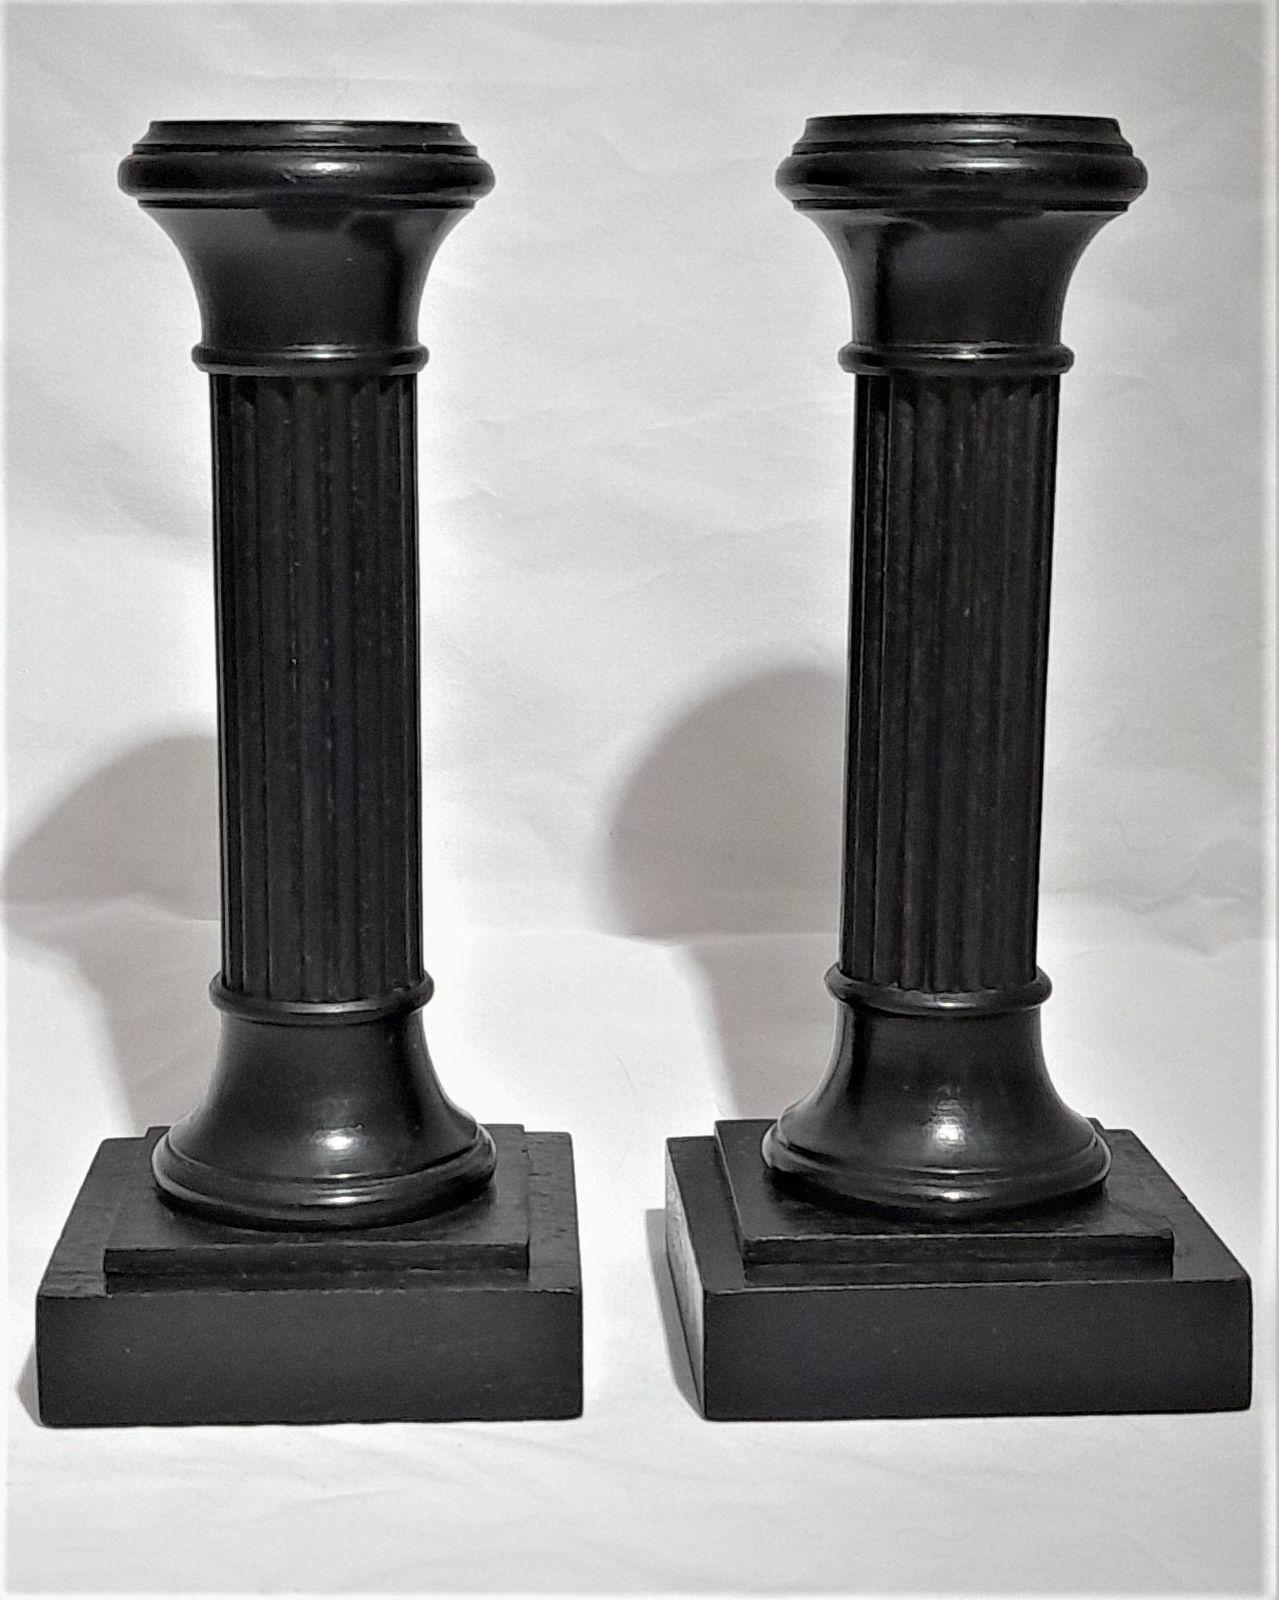 Pair of antique Edwardian Ebony ribbed Doric column wooden candlesticks 6 inches high circa 1905